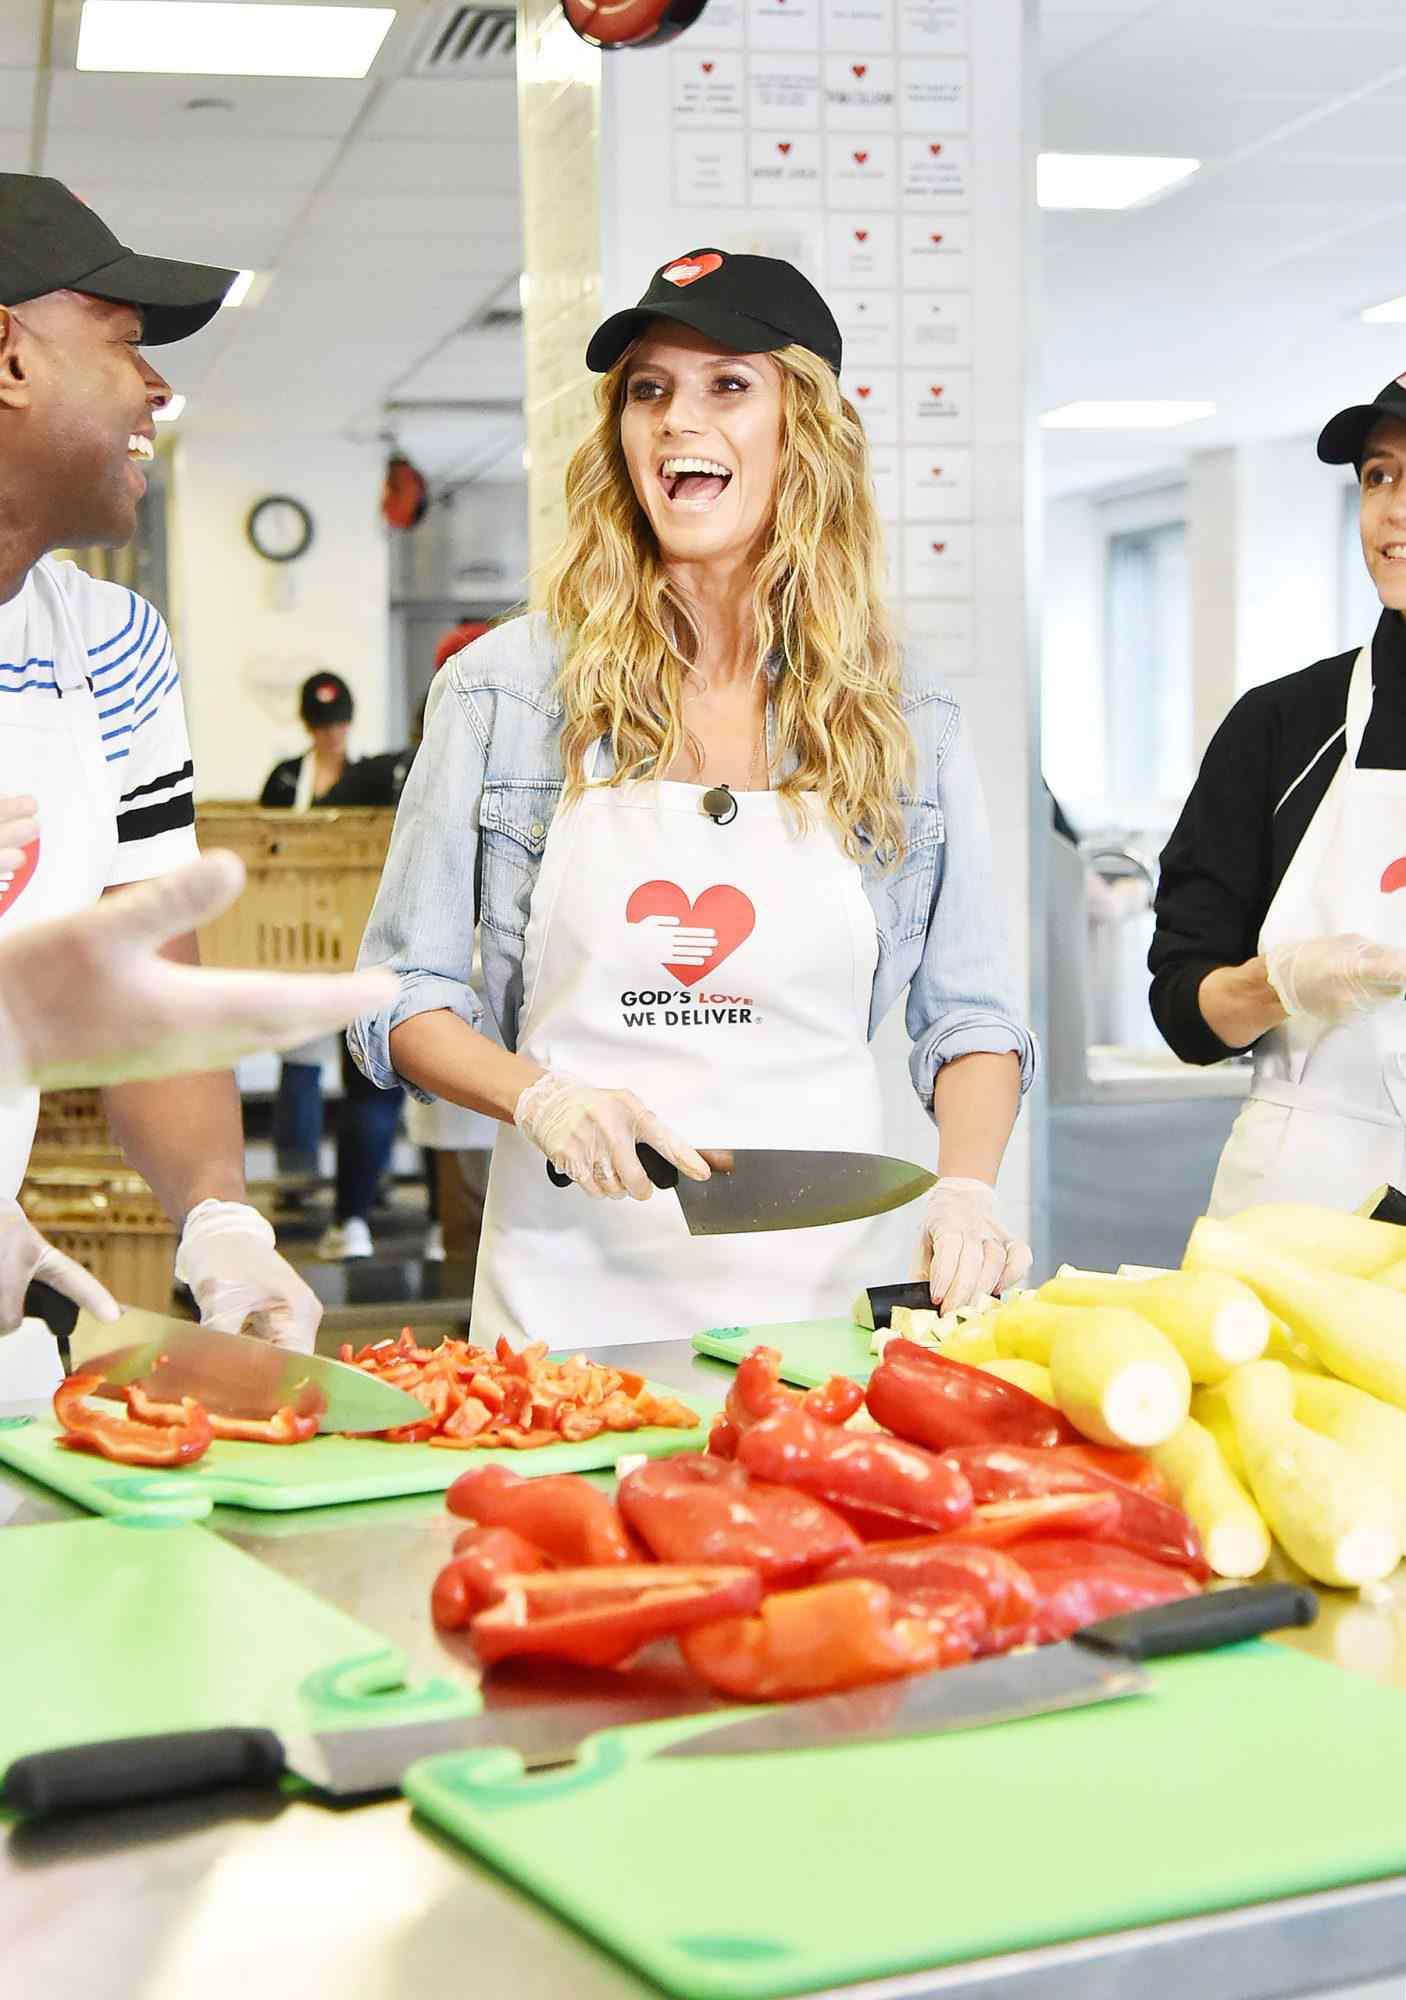 Heidi Klum Volunteers In The Kitchen At God's Love We Deliver